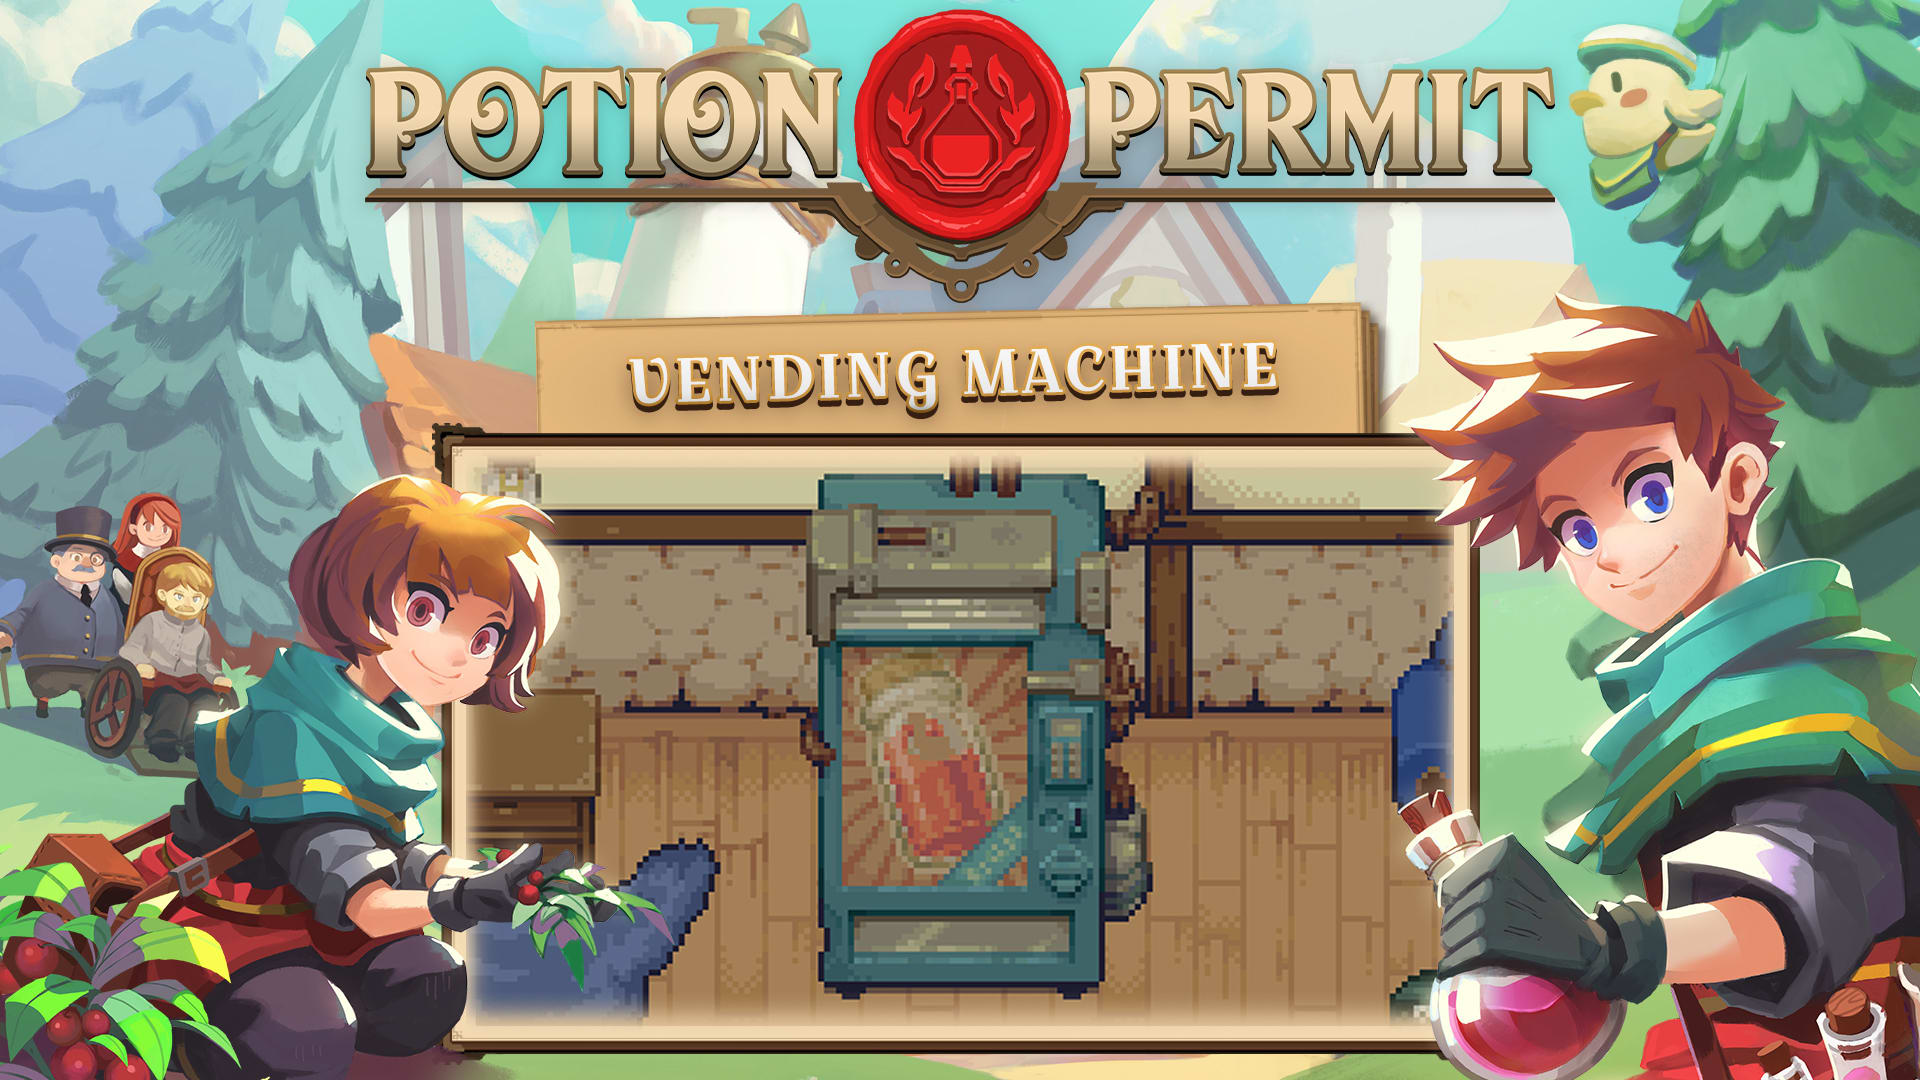 Potion Permit - Vending Machine